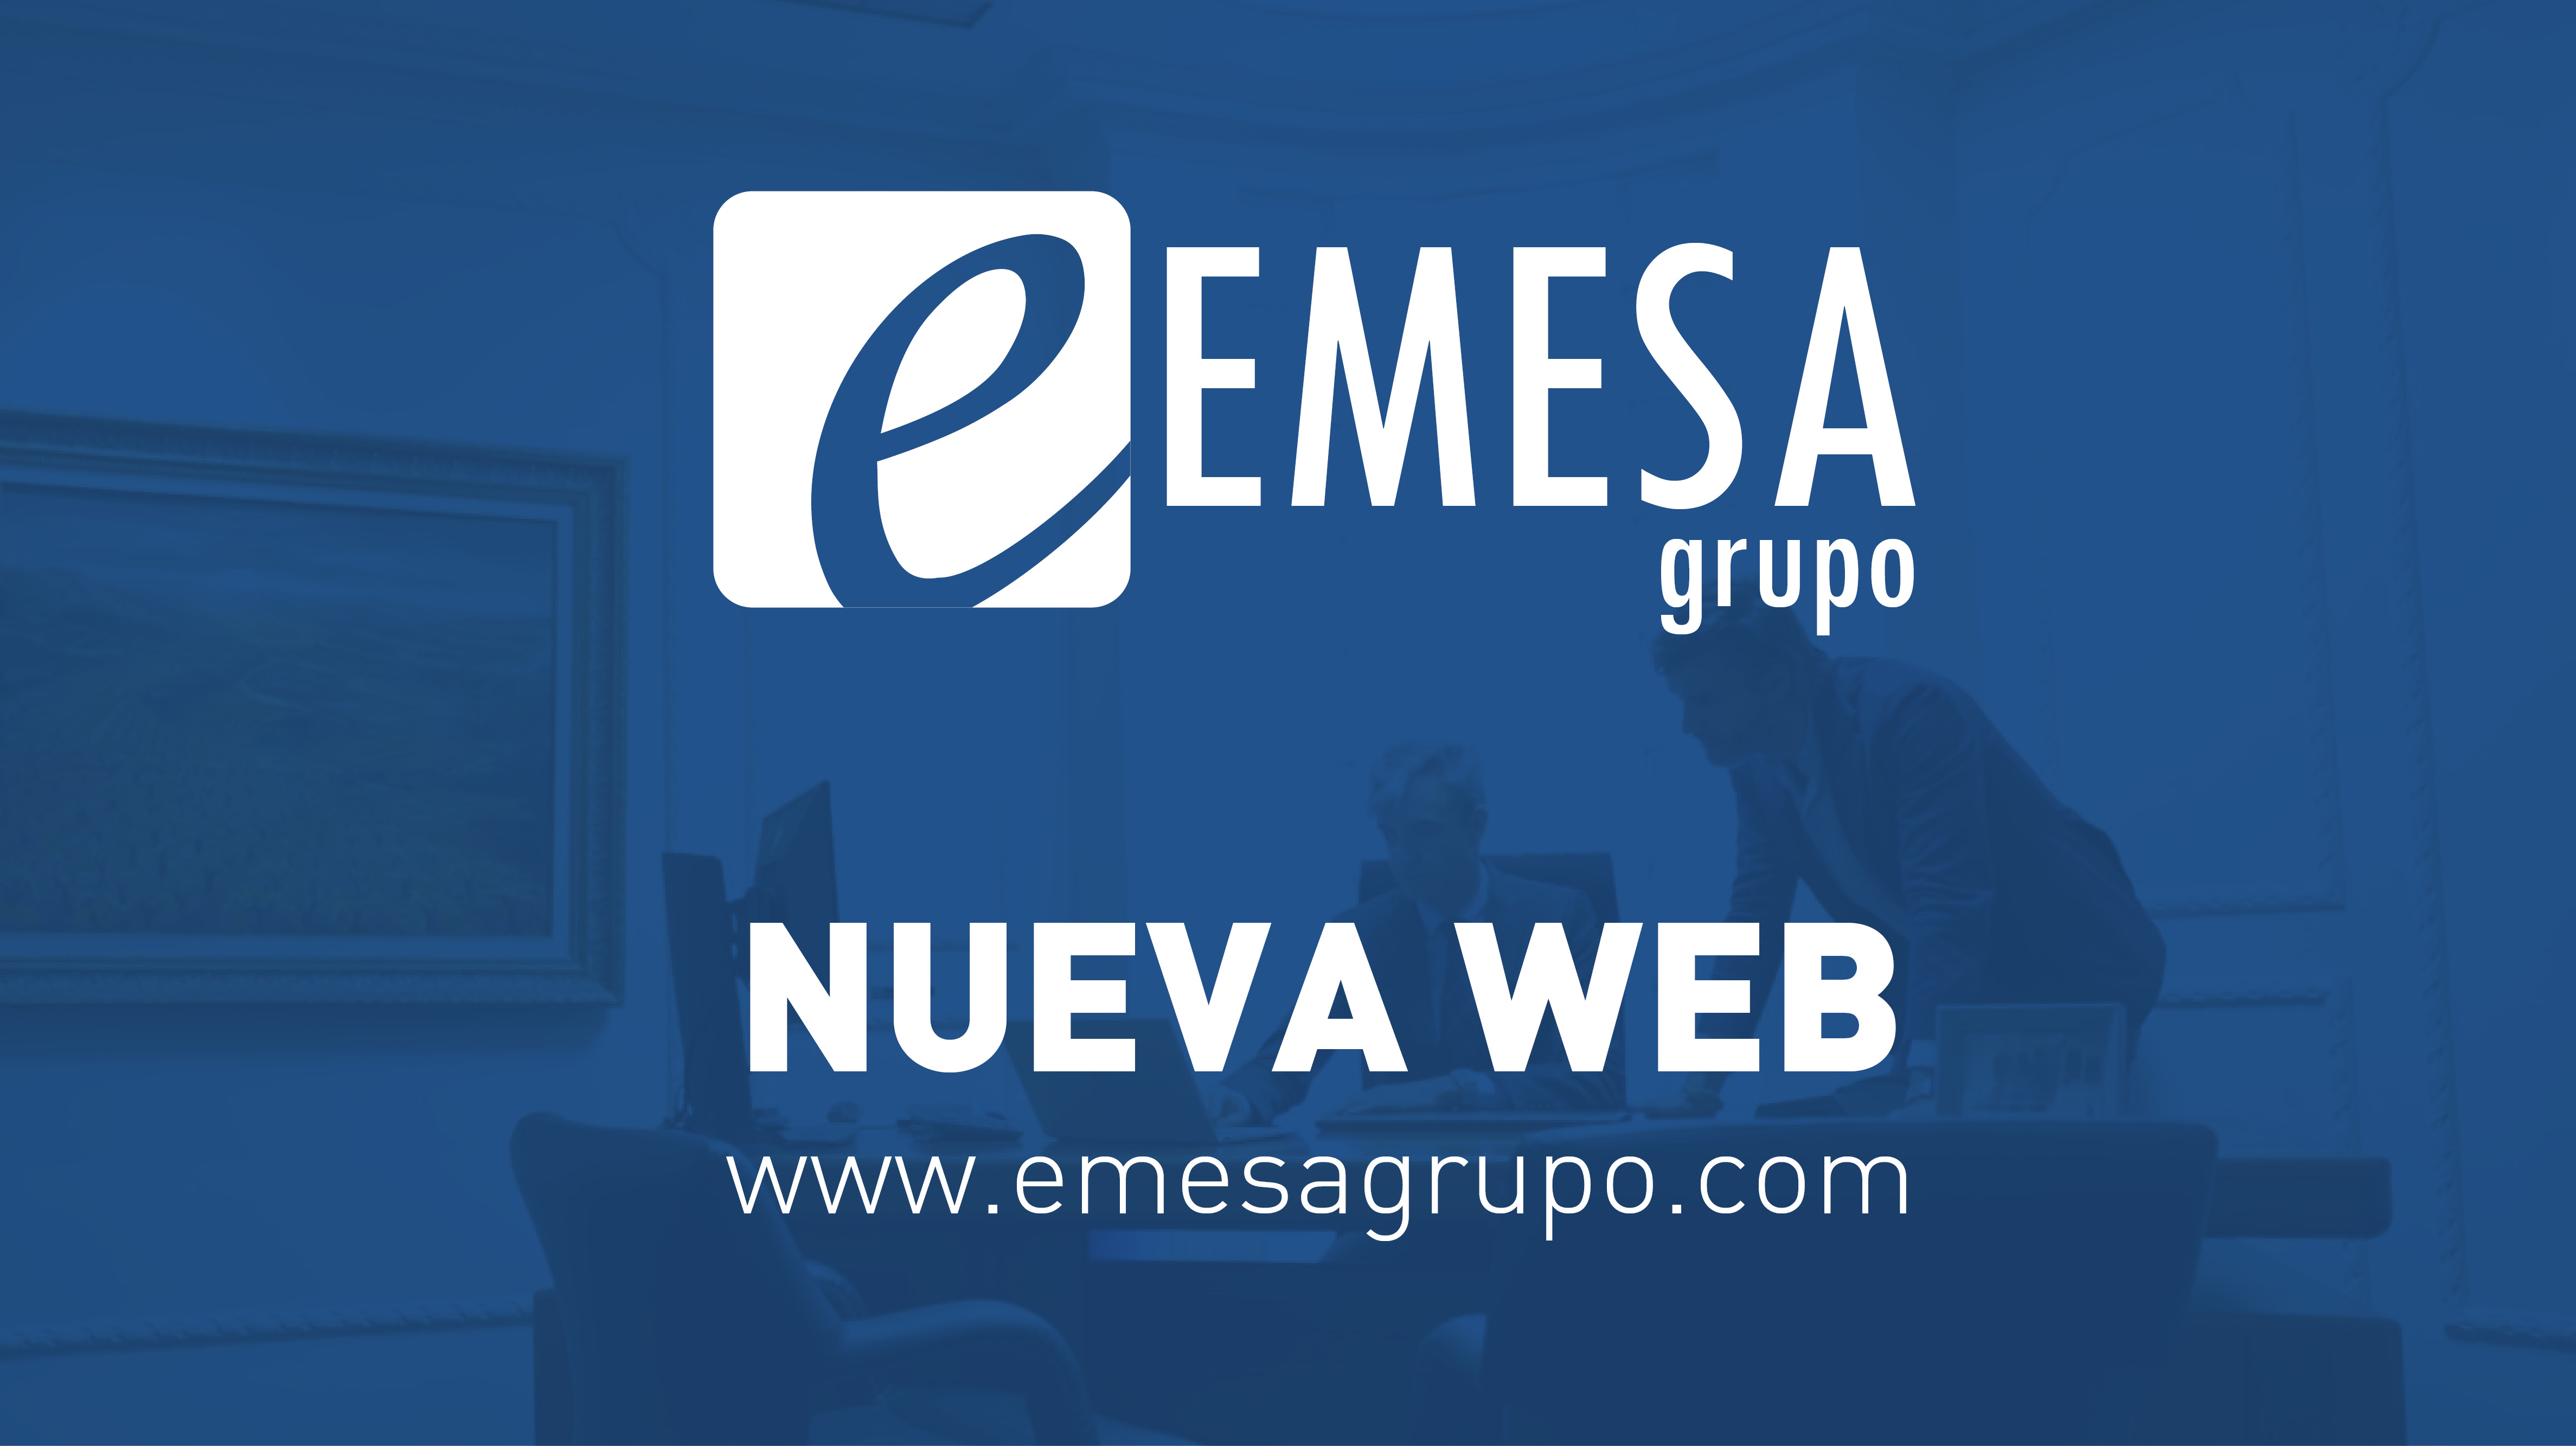 Estrenamos nueva web. Grupo EMESA